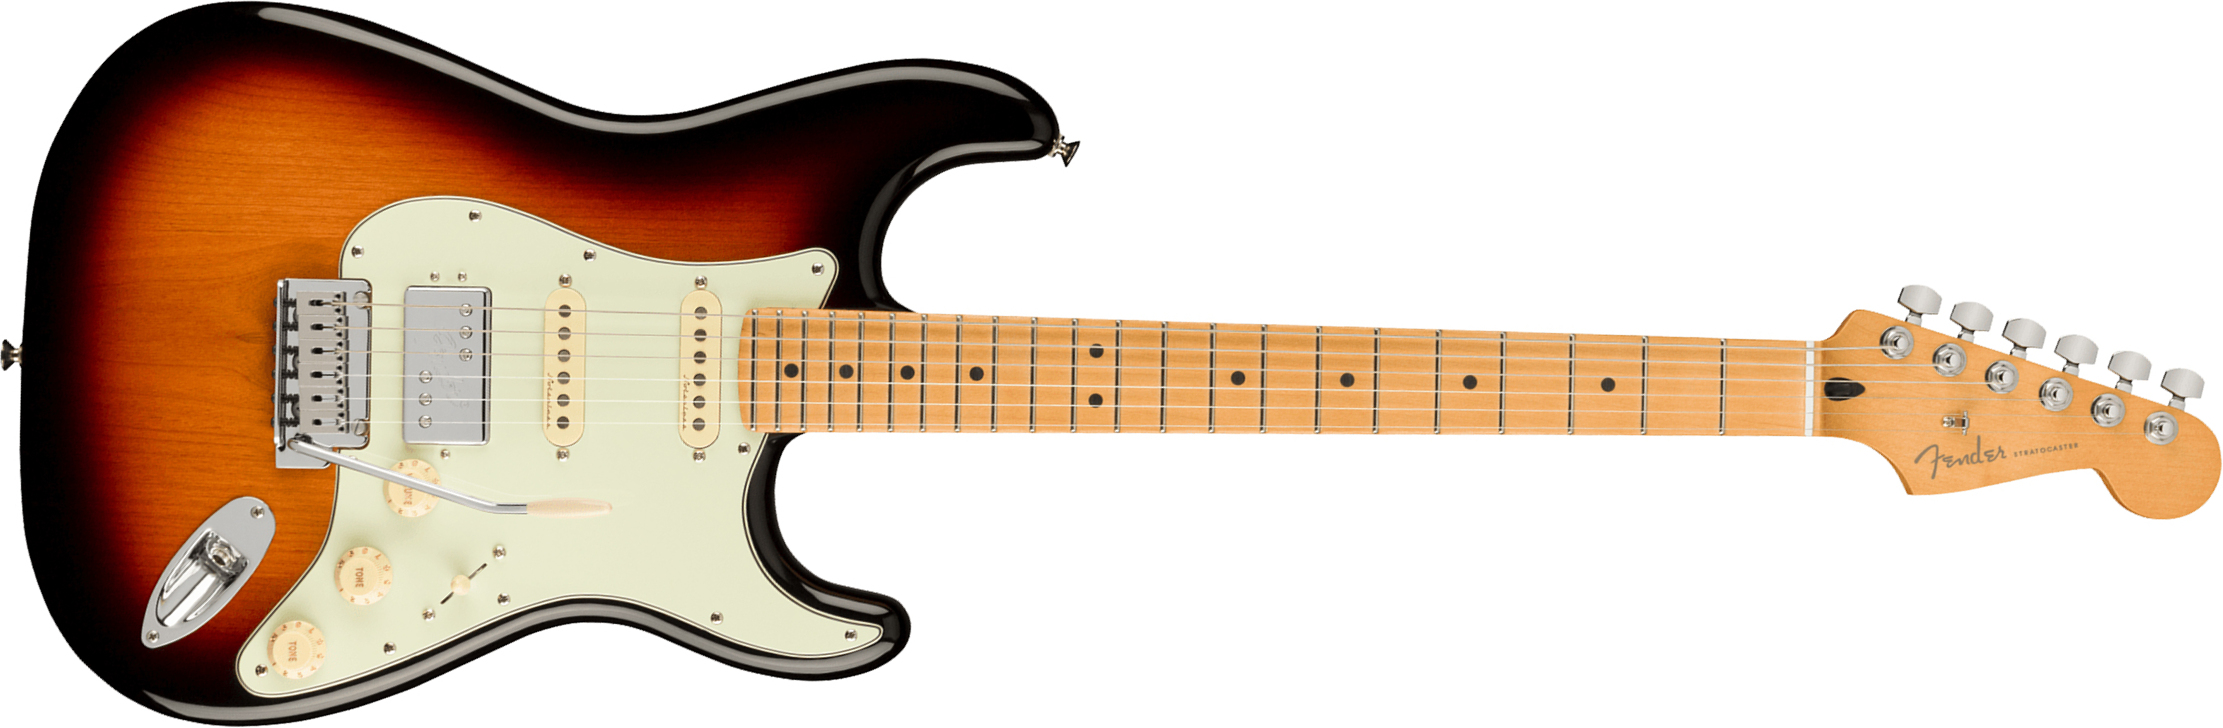 Fender Strat Player Plus Mex Hss Trem Mn - 3-color Sunburst - E-Gitarre in Str-Form - Main picture